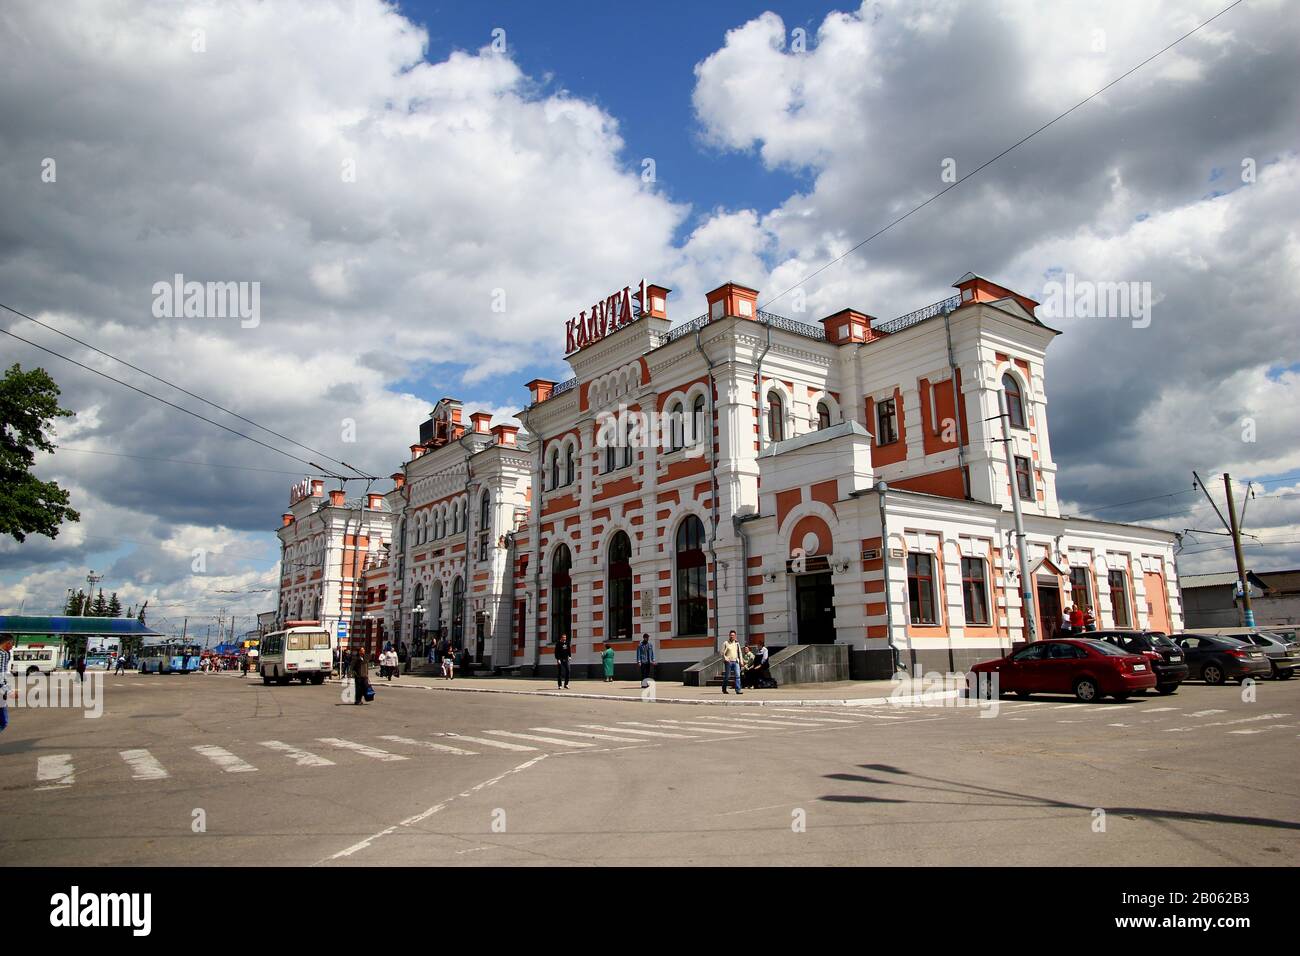 The train station in Kaluga, Russia Stock Photo